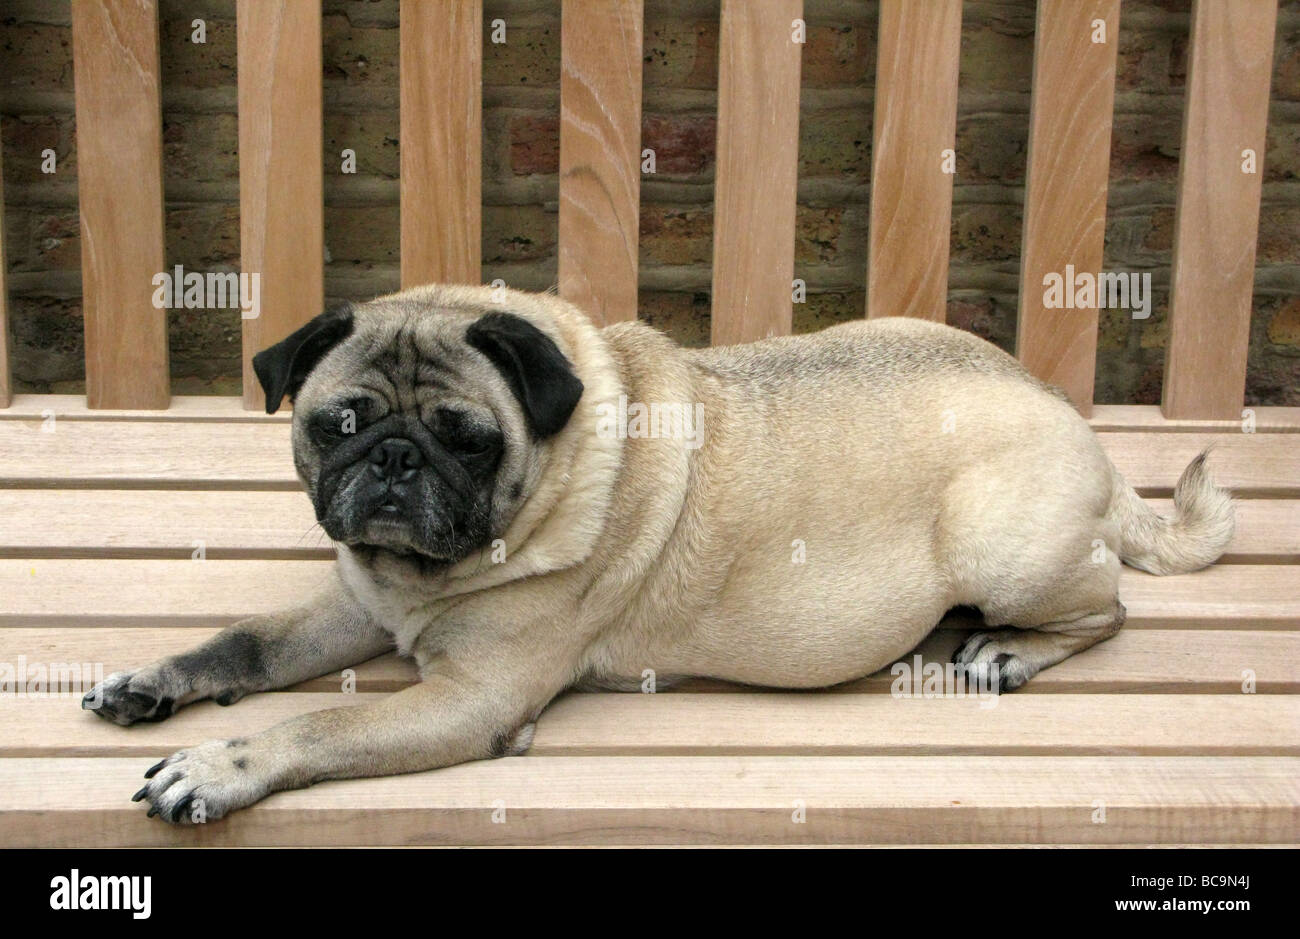 Pug lying on a bench, Chicago, Illinois, USA Stock Photo